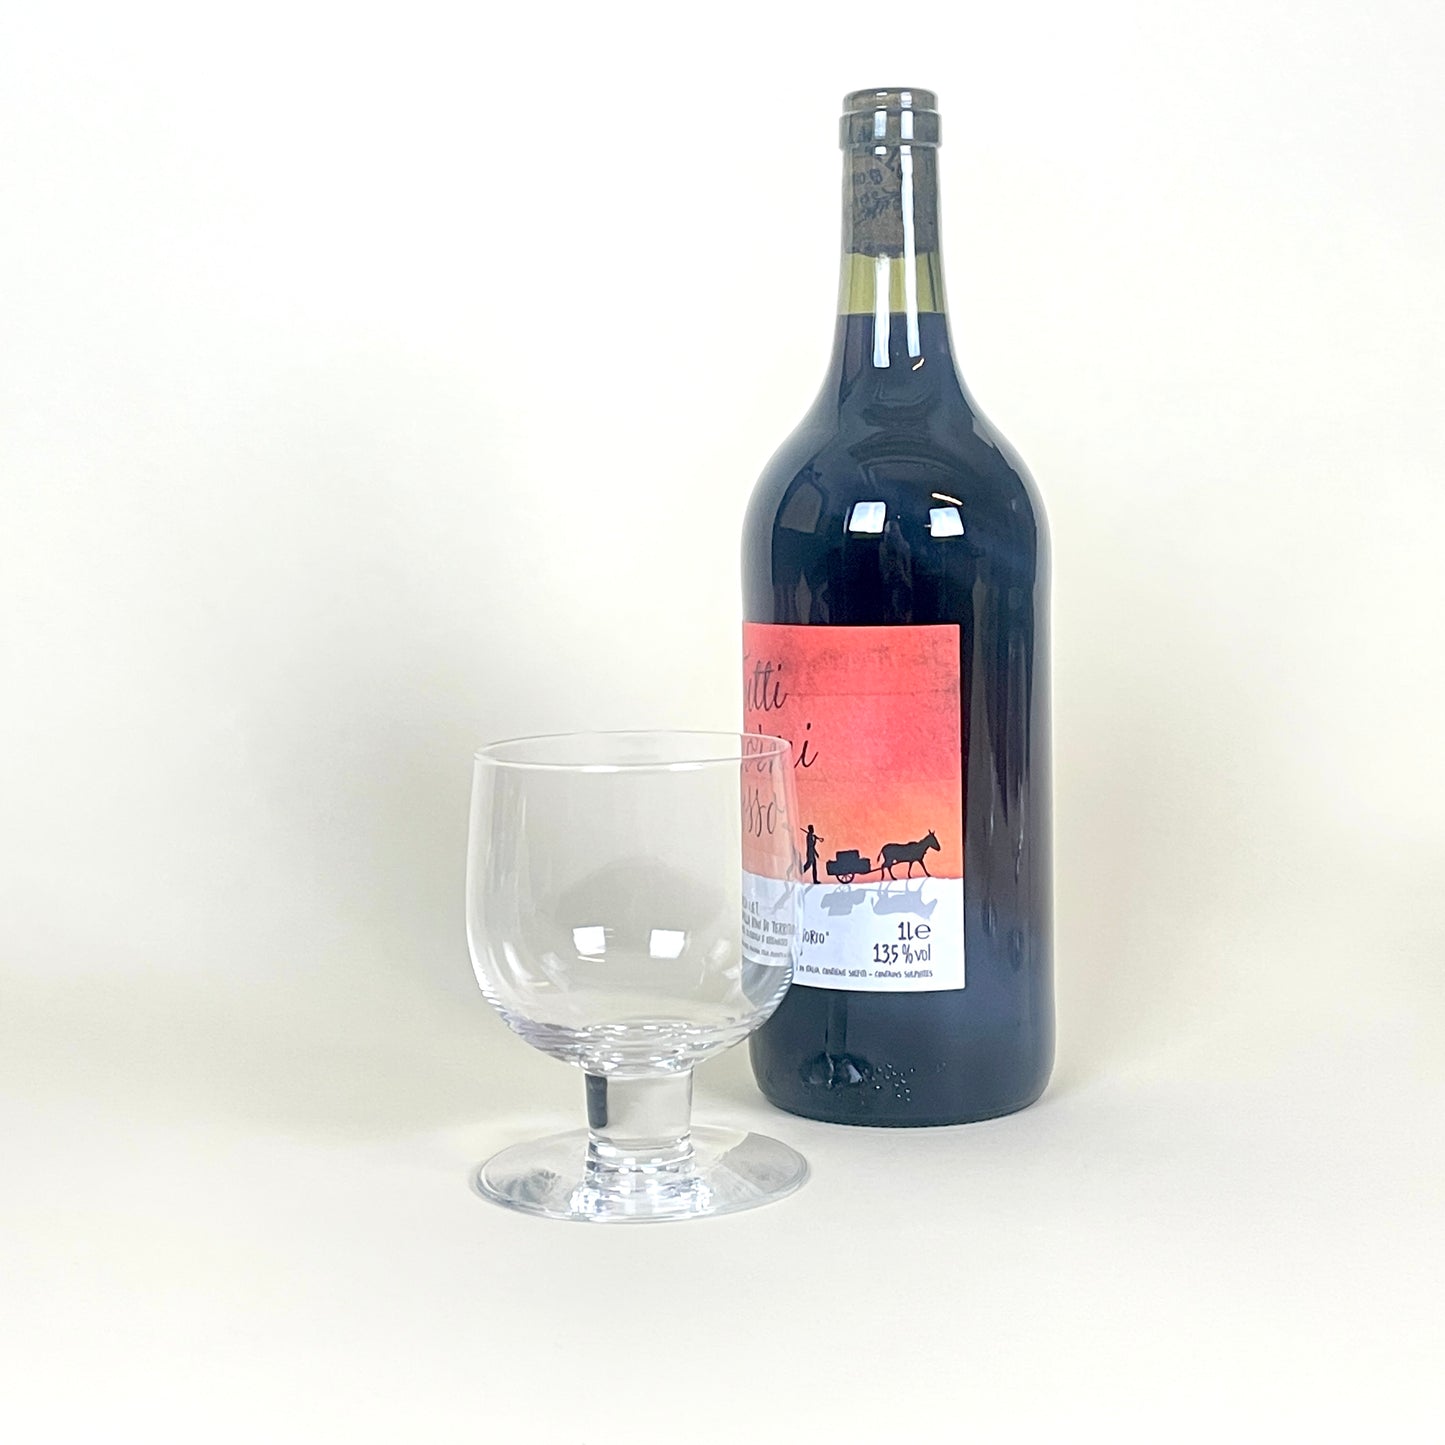 Simon Klenell & Arranging Things "Coupe Du Monde" 6 x wine glasses